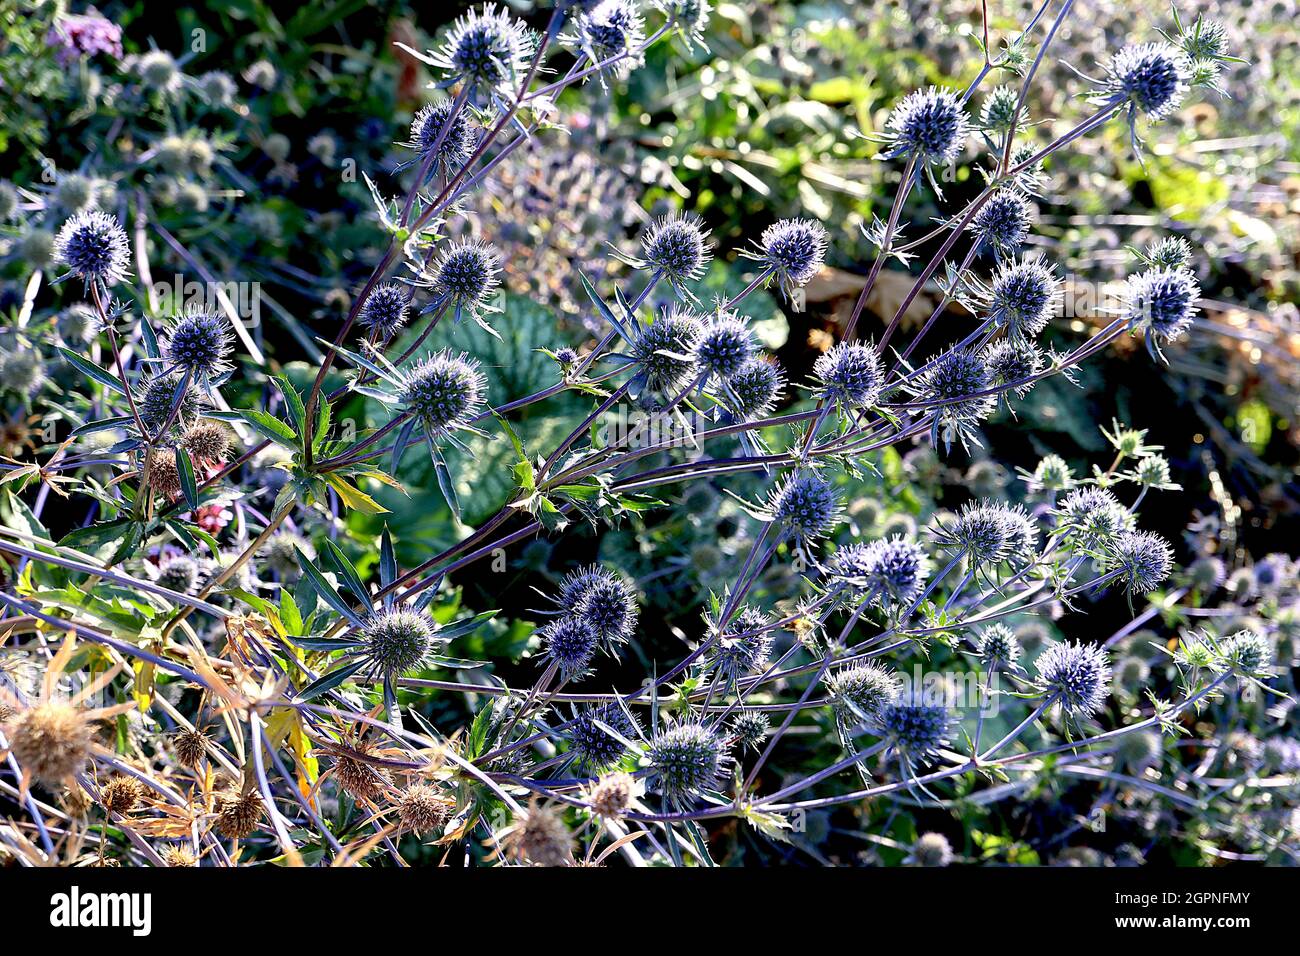 Eryngium planum ‘Blue Cap’ blue eryngo Blaukappe - kugelförmige Blütenköpfe auf kurzen, schlanken, blassen mauveblauen Deckblättern, September, England, Großbritannien Stockfoto